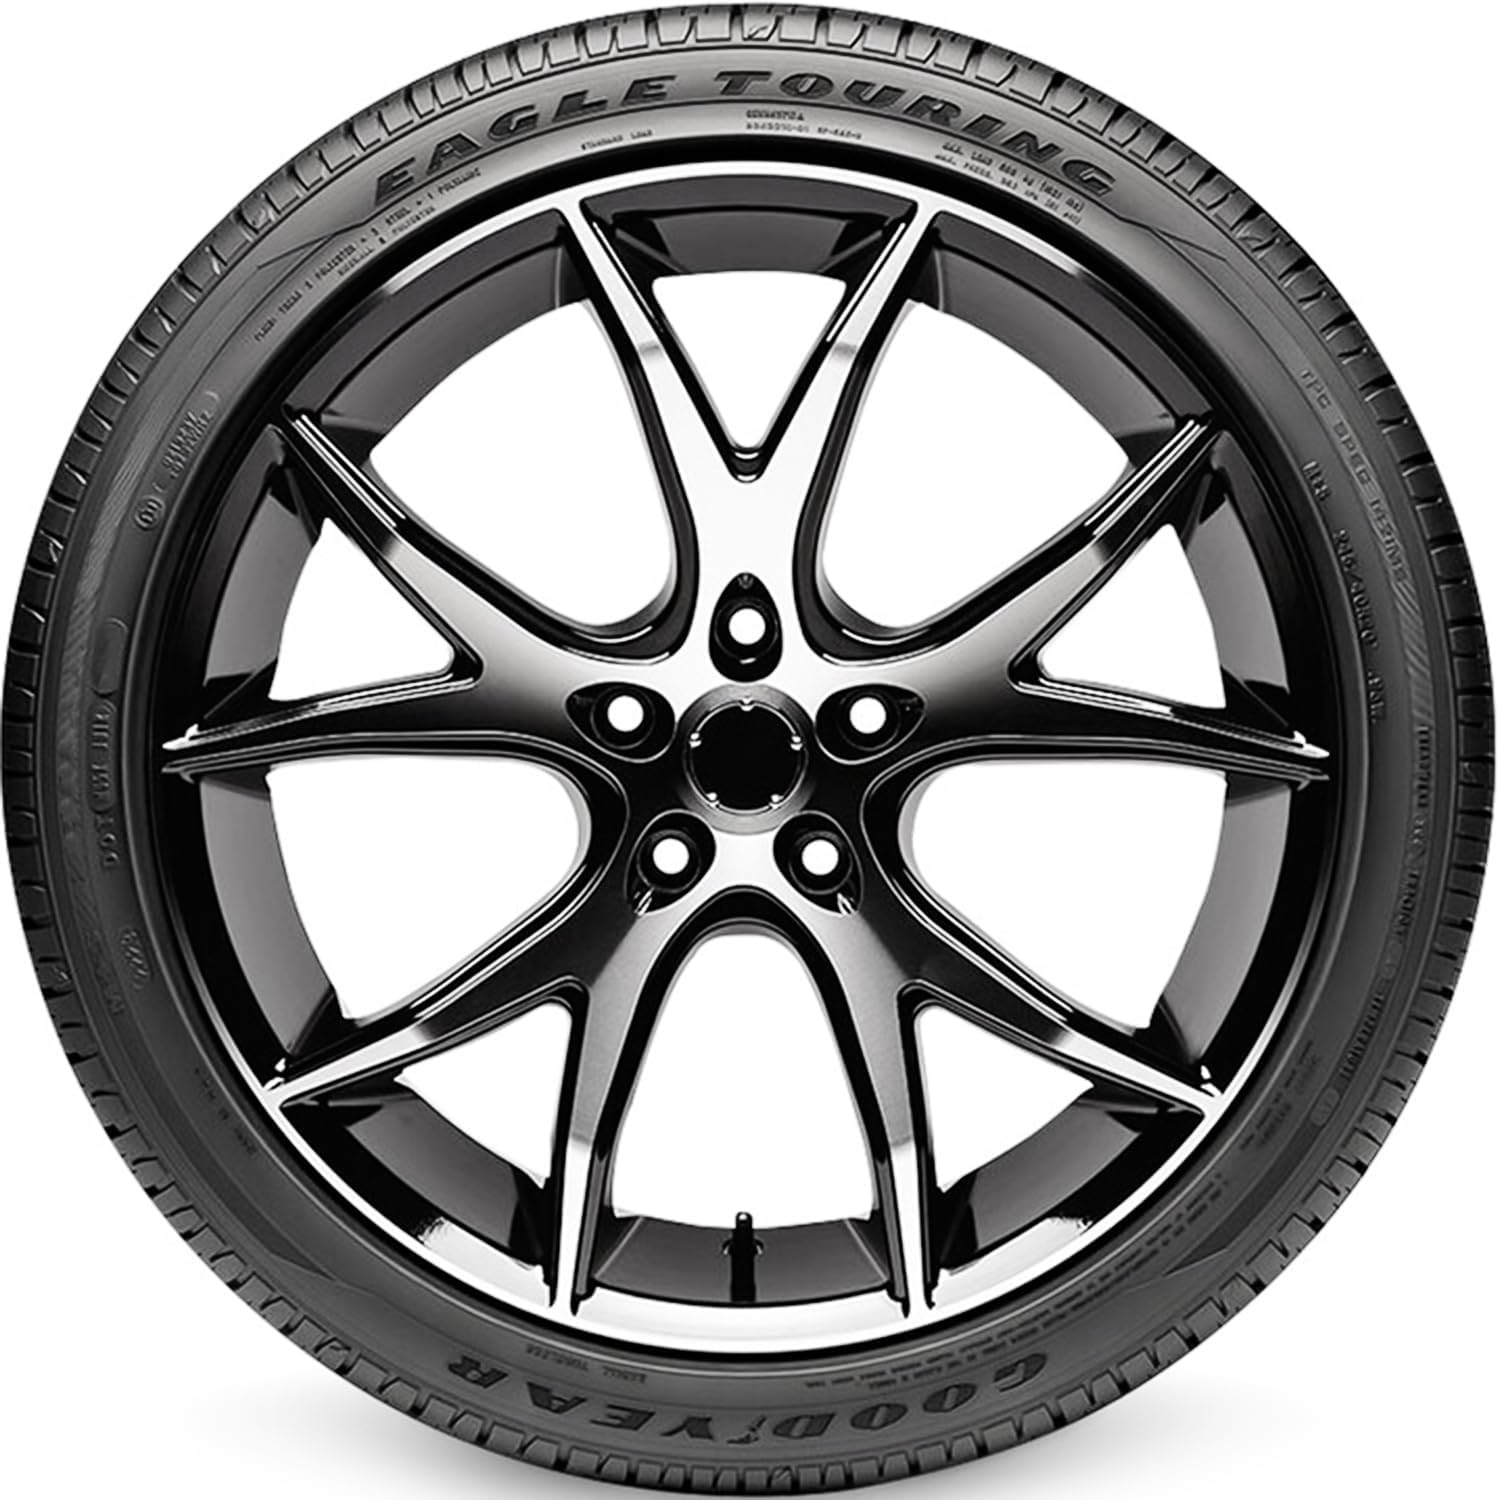 Goodyear Eagle Touring all_ Season Radial Tire-285/45R22 114H - Goodyear Eagle Touring Tire-285/45R22 114H Review